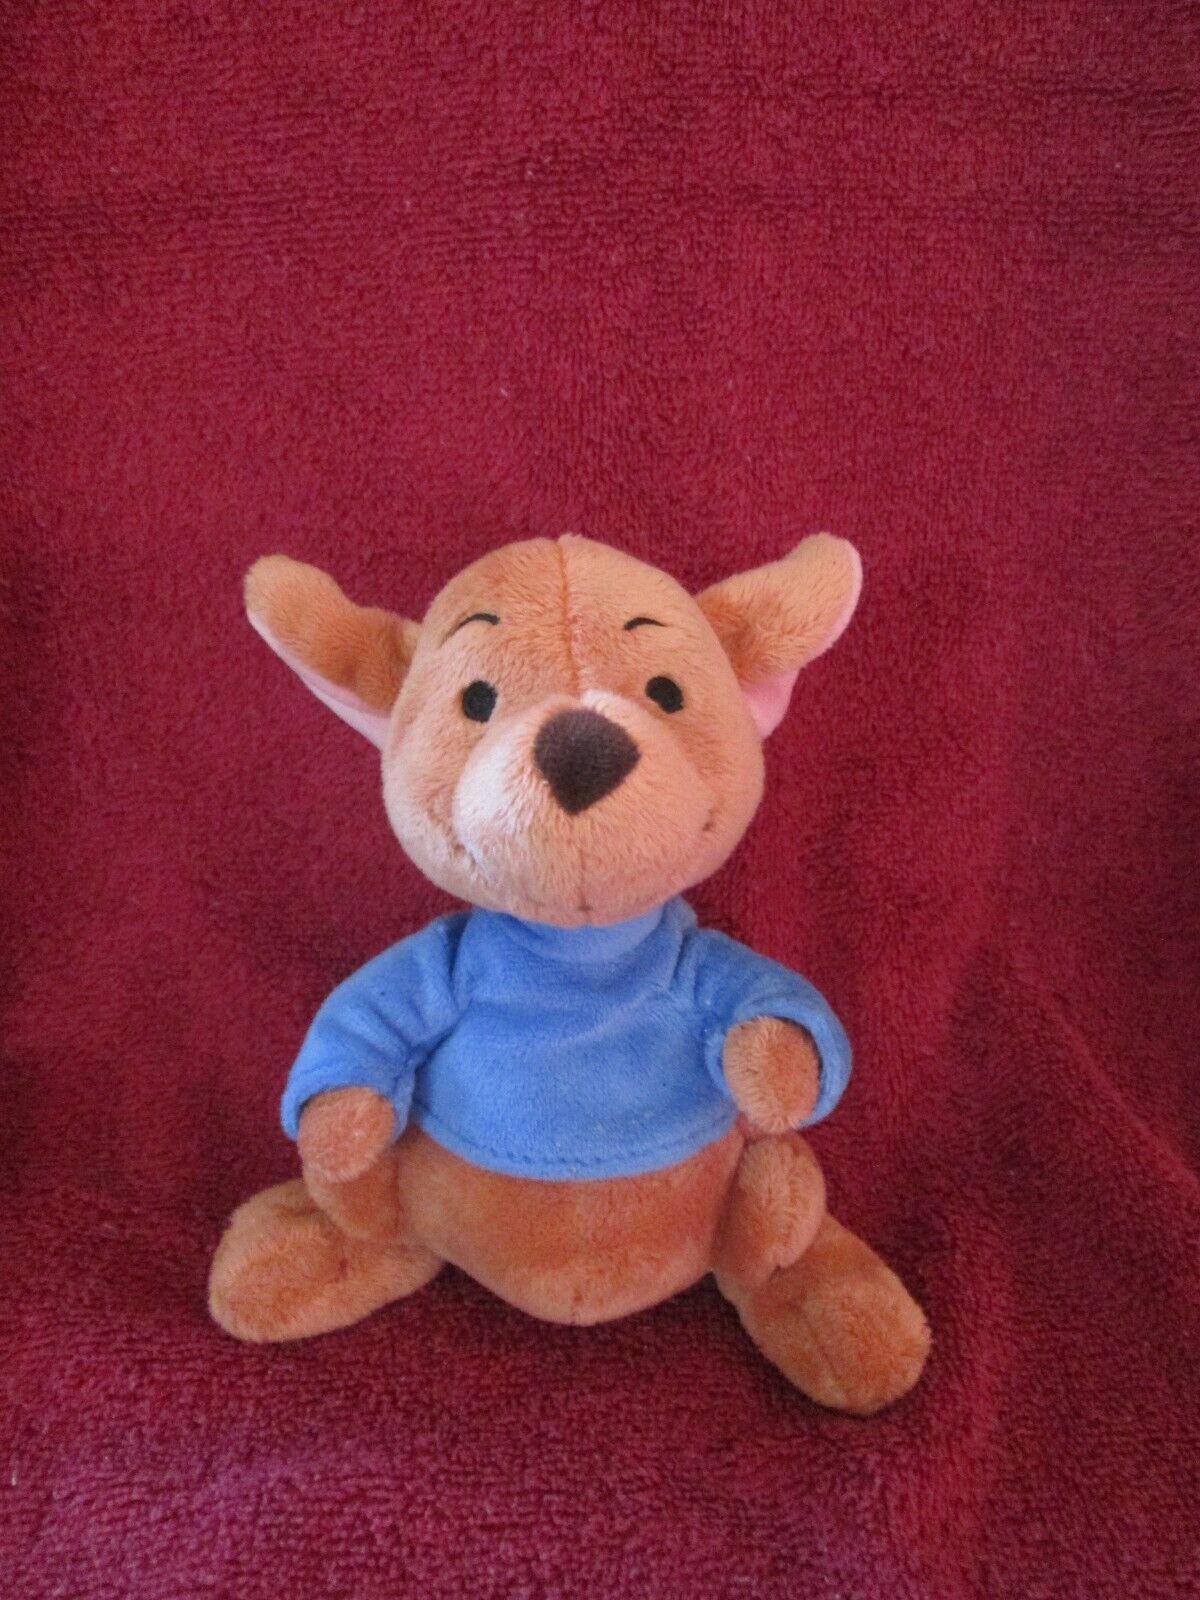 Disney Winnie The Pooh Roo Plush Toy Stuffed Animal Kangaroo , Disney Store 7”